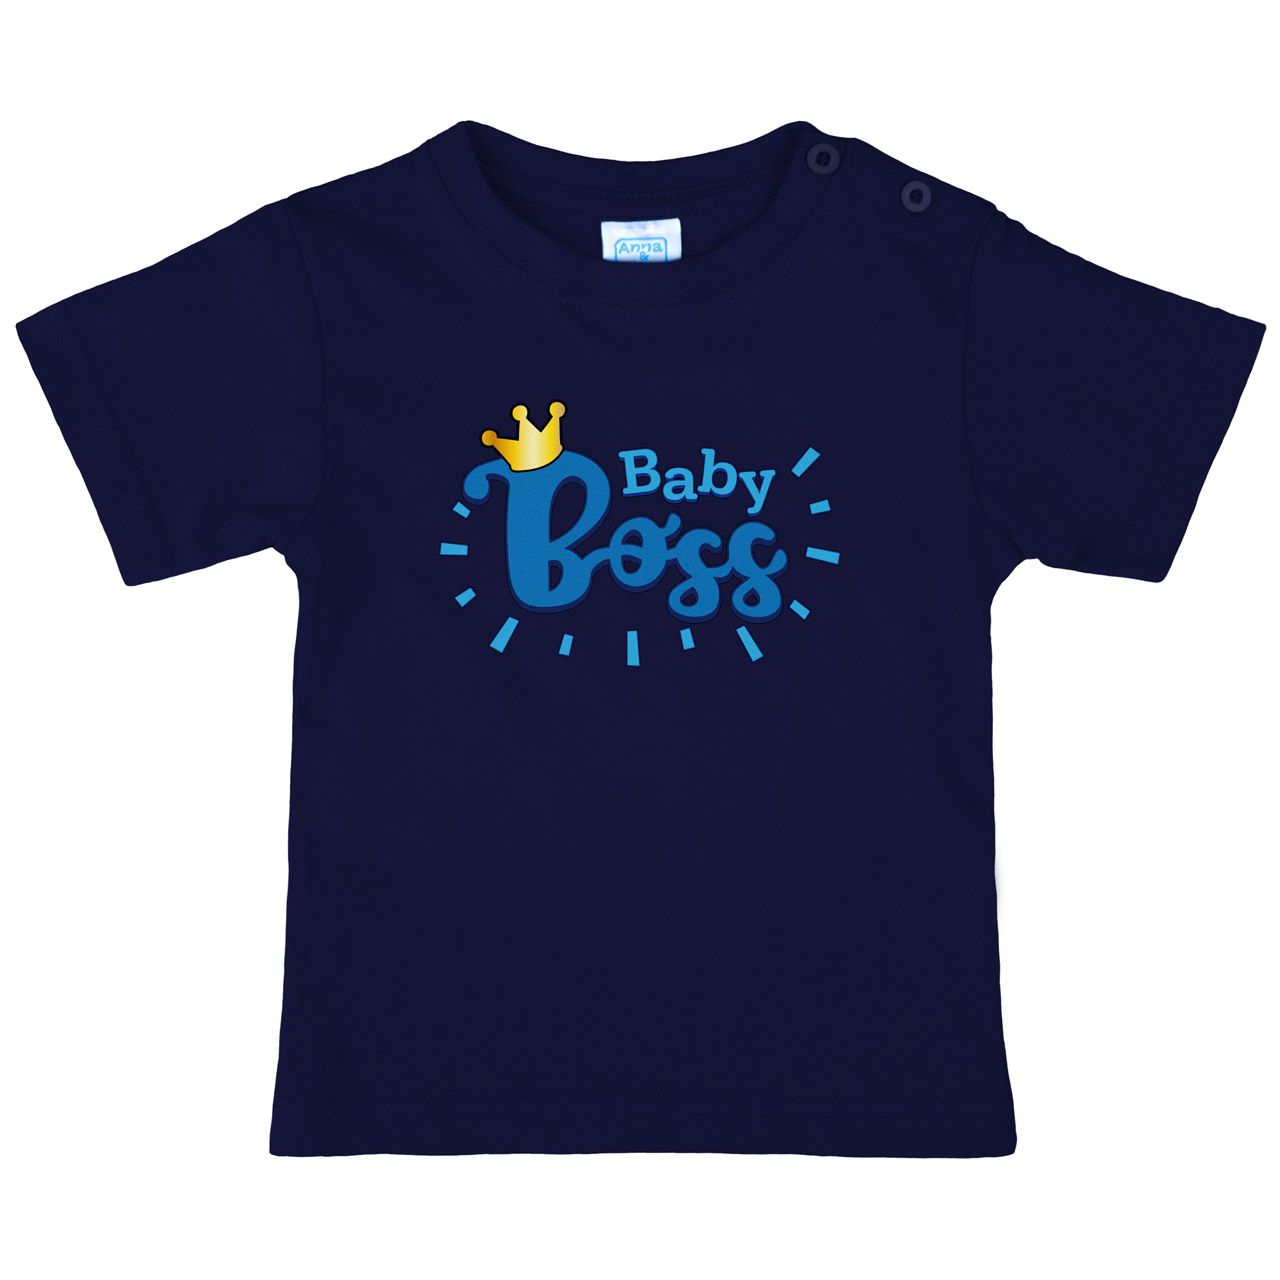 Baby Boss Blau Kinder T-Shirt navy 56 / 62